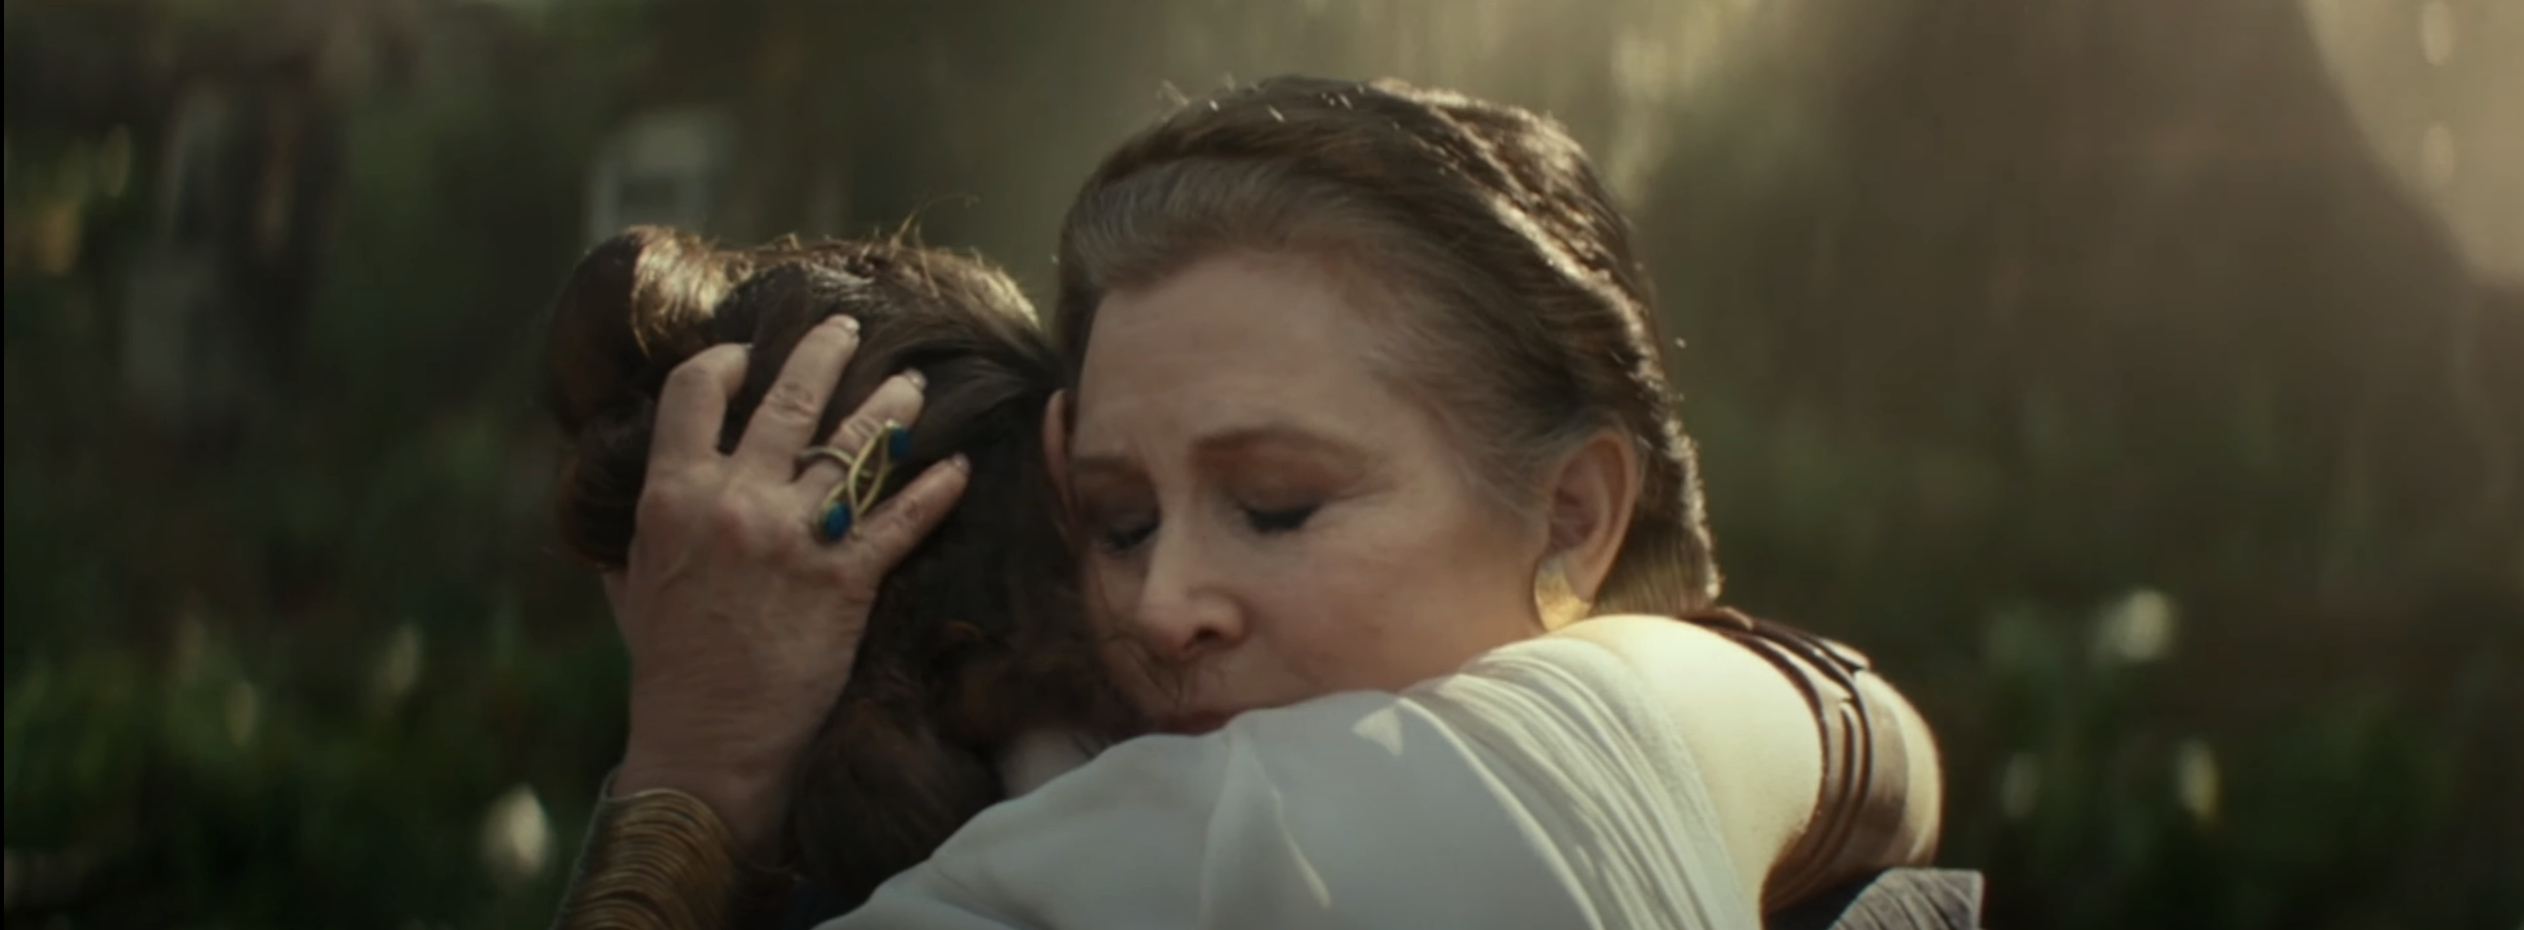 Leia Organa embracing Wookiee Chewbacca in a scene from a Star Wars film